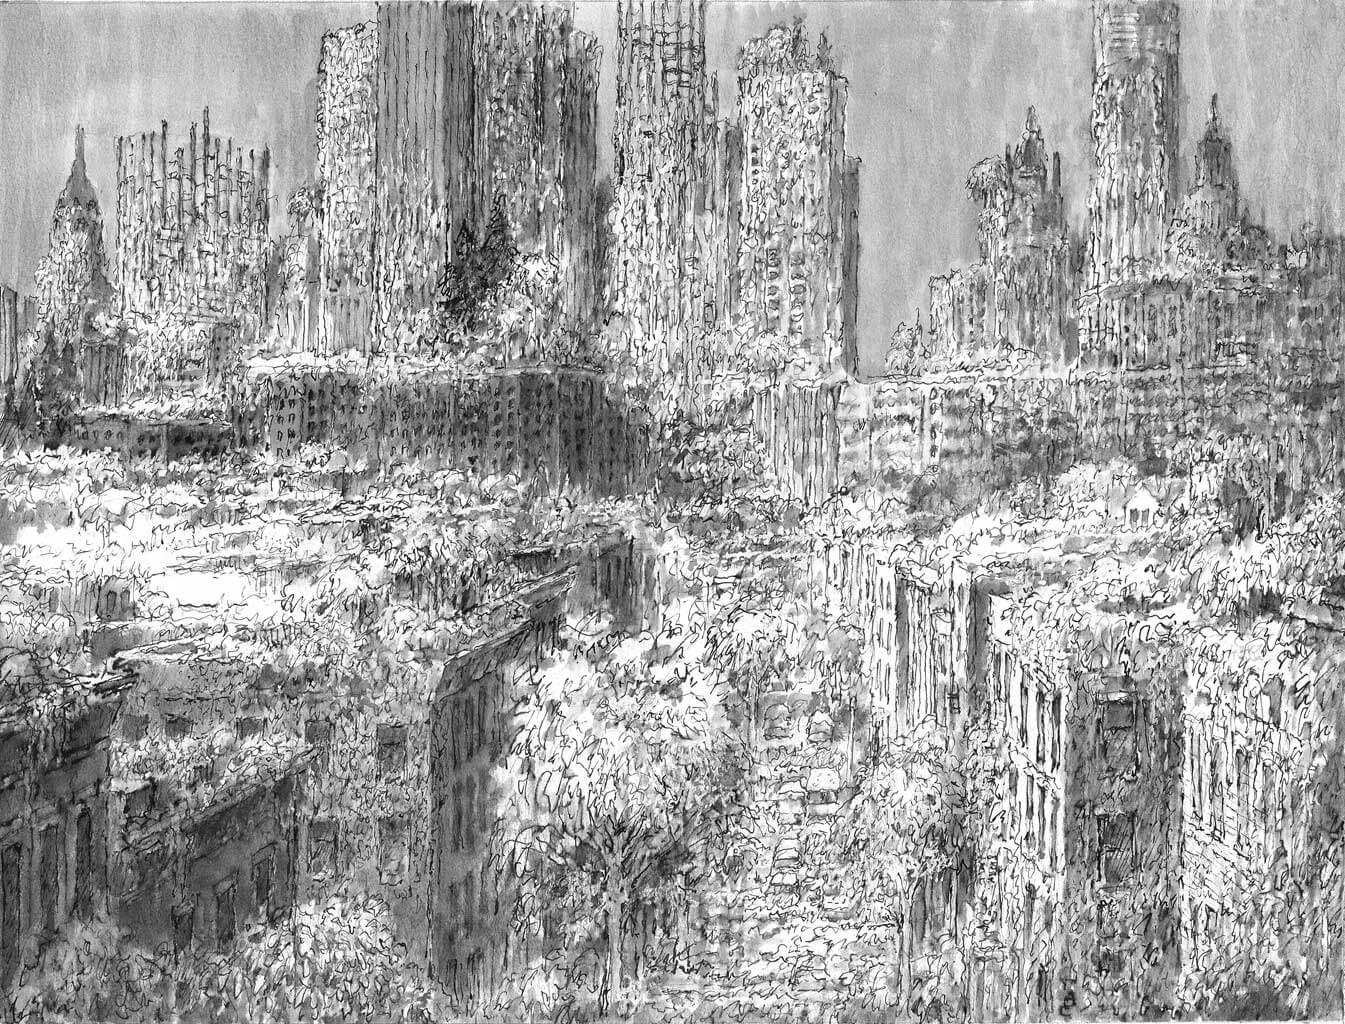 sketch of city